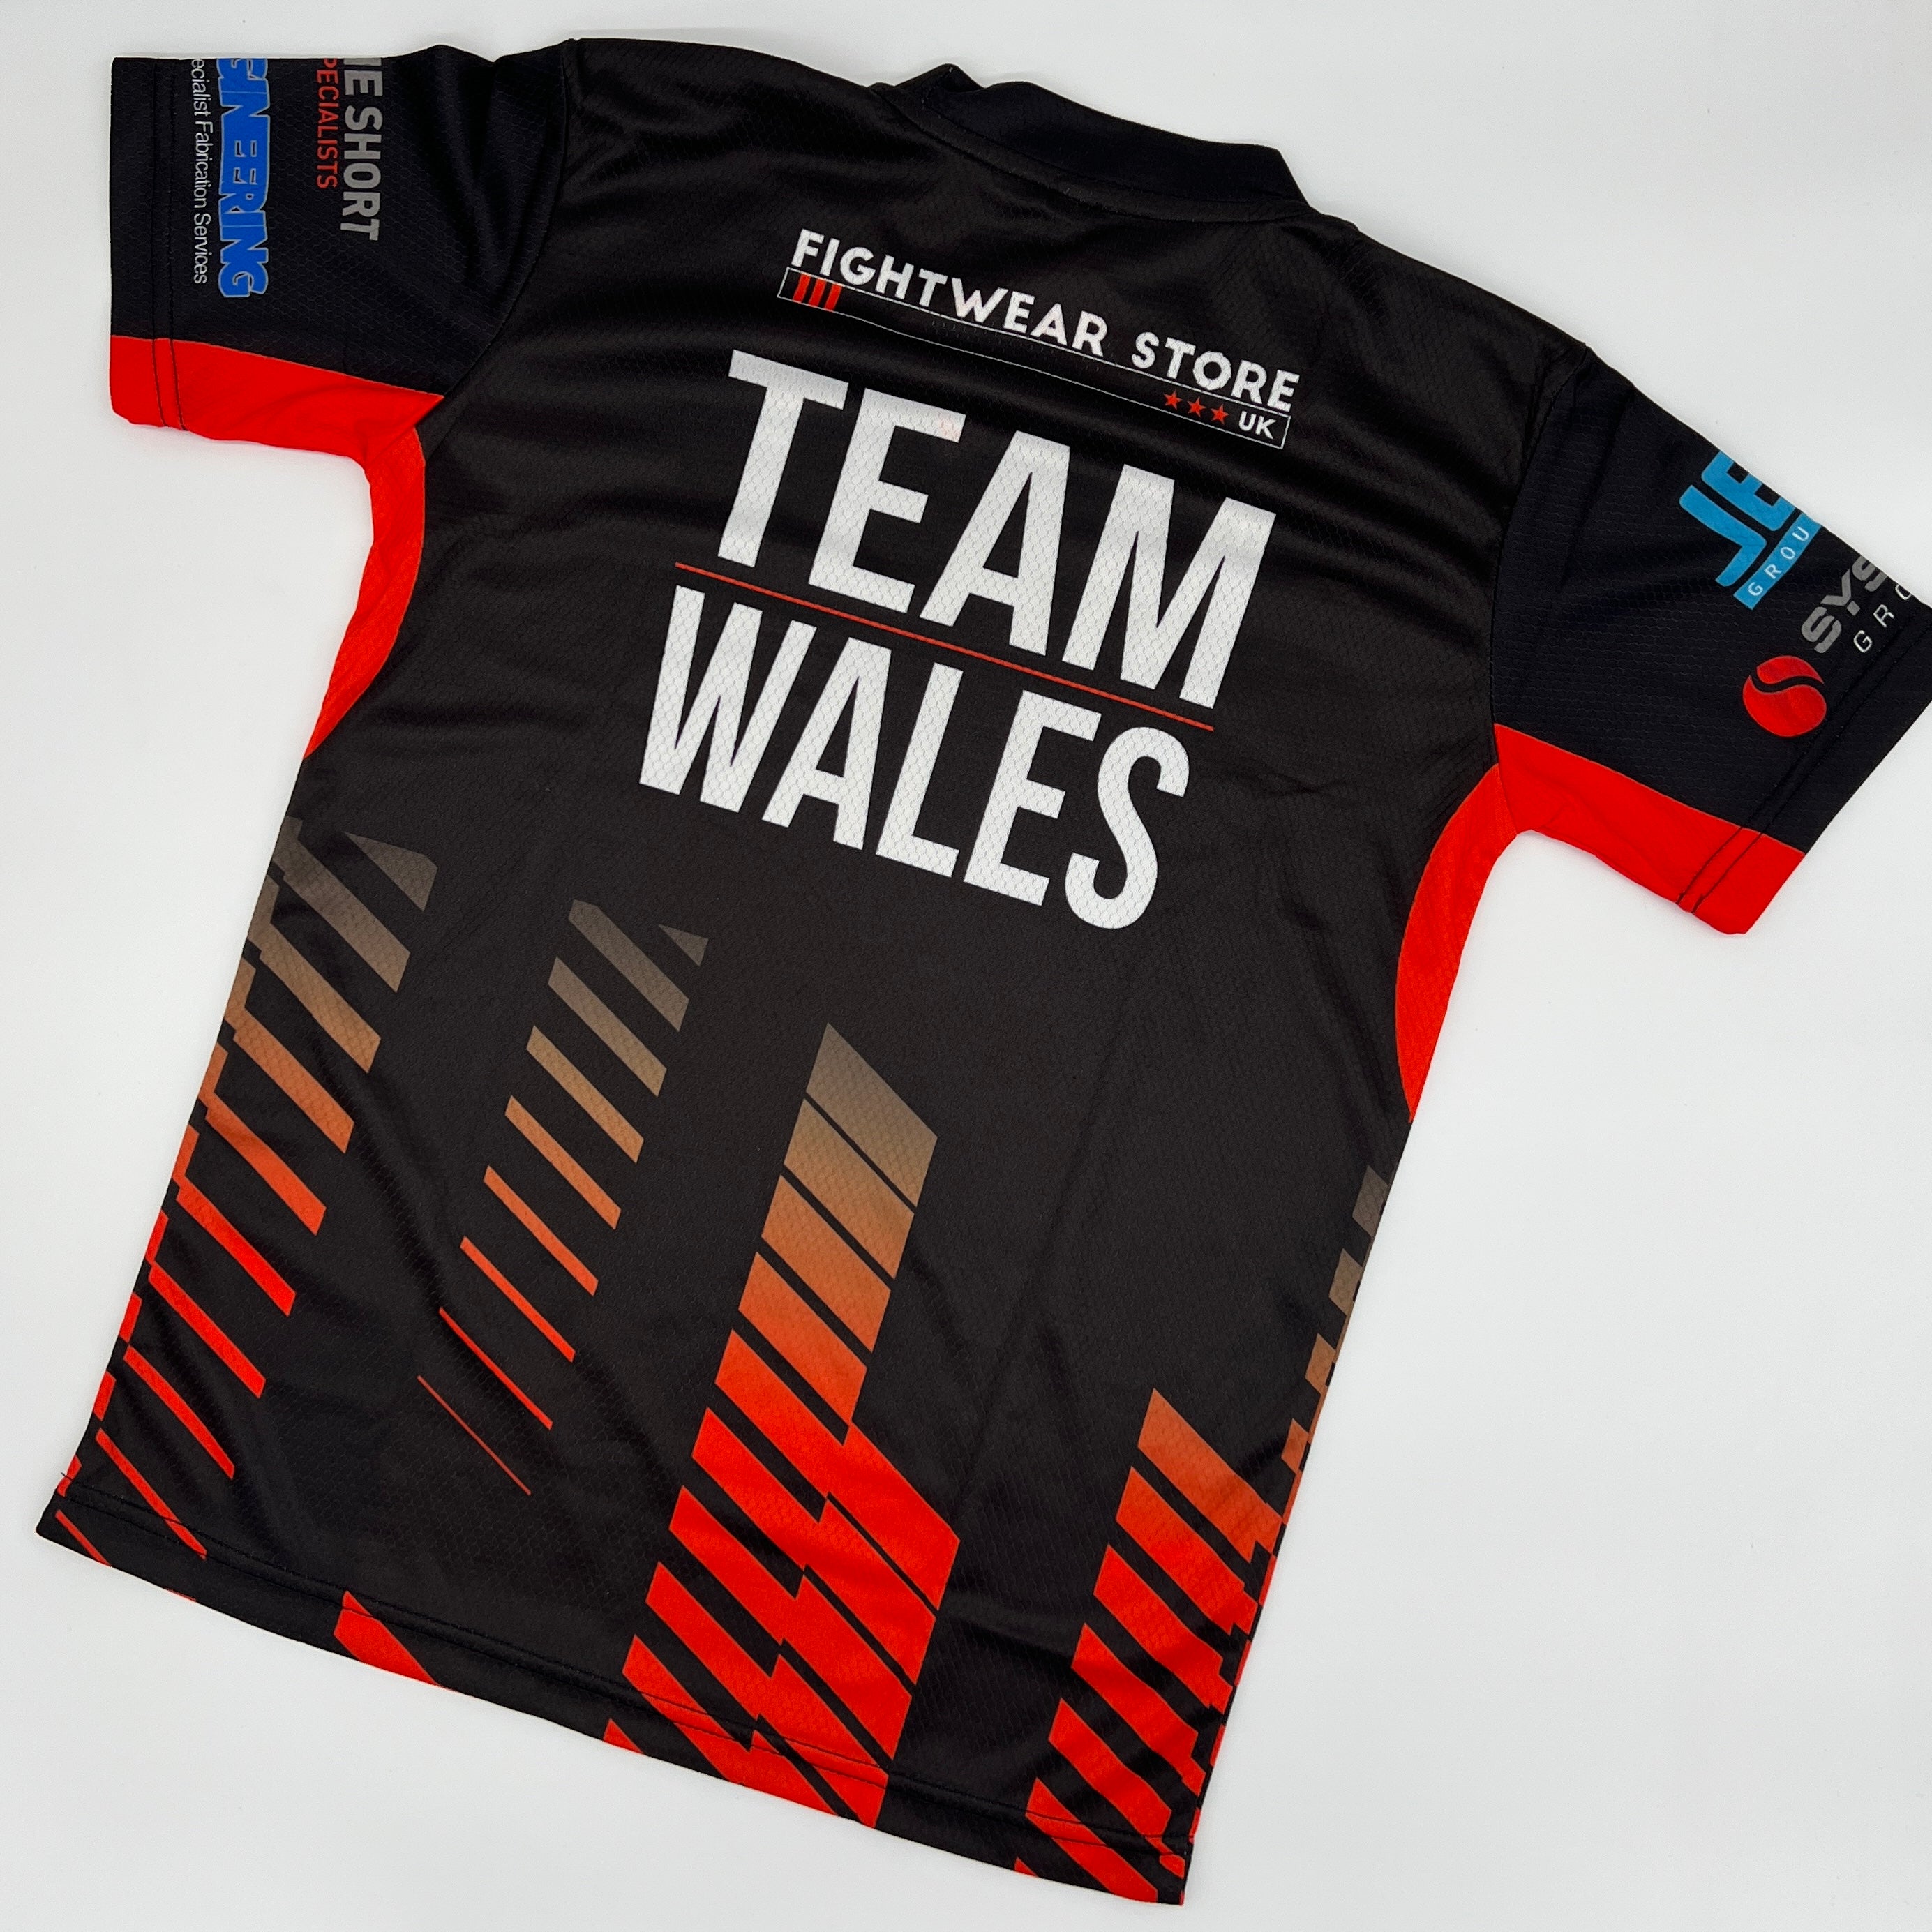 Welsh Kickboxing National Team T-Shirt (2018)